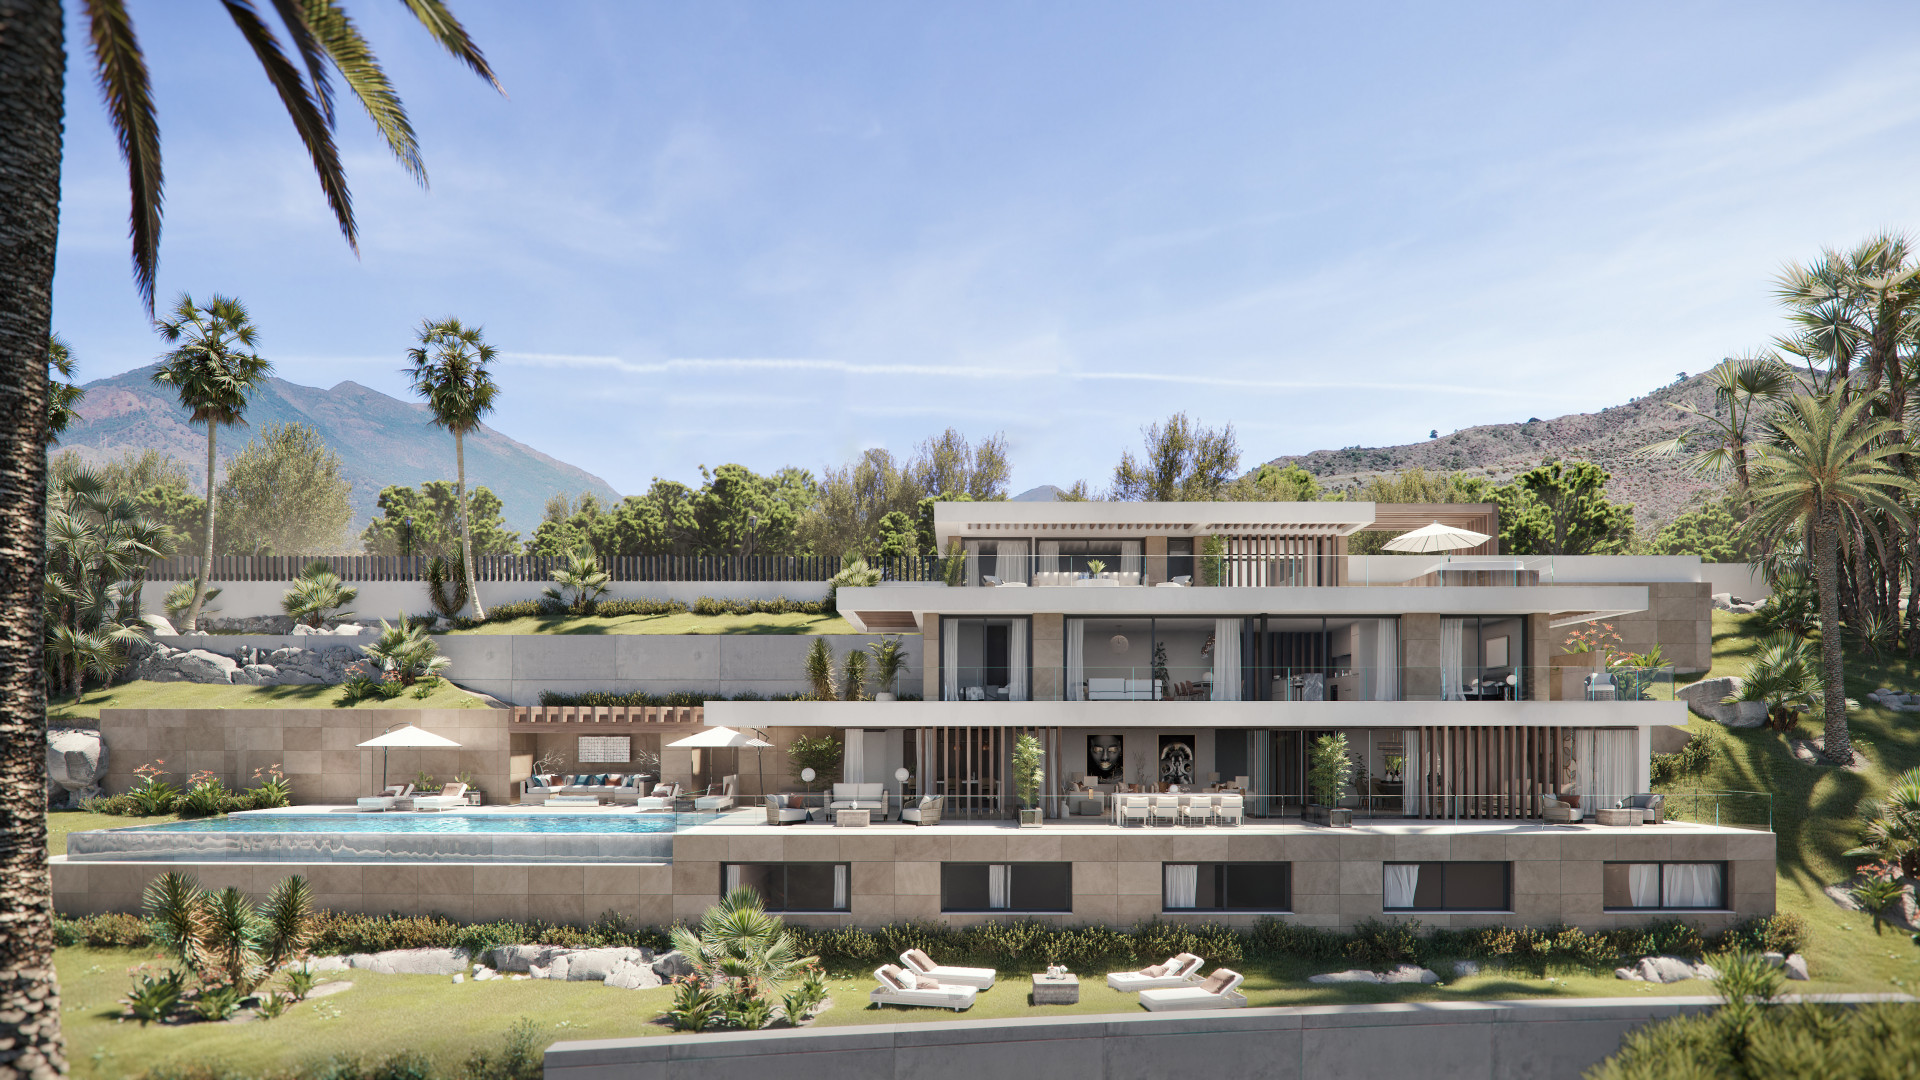 The Secret, pure luxury in these villas within the exclusive resort Real de la Quinta in Benahavis